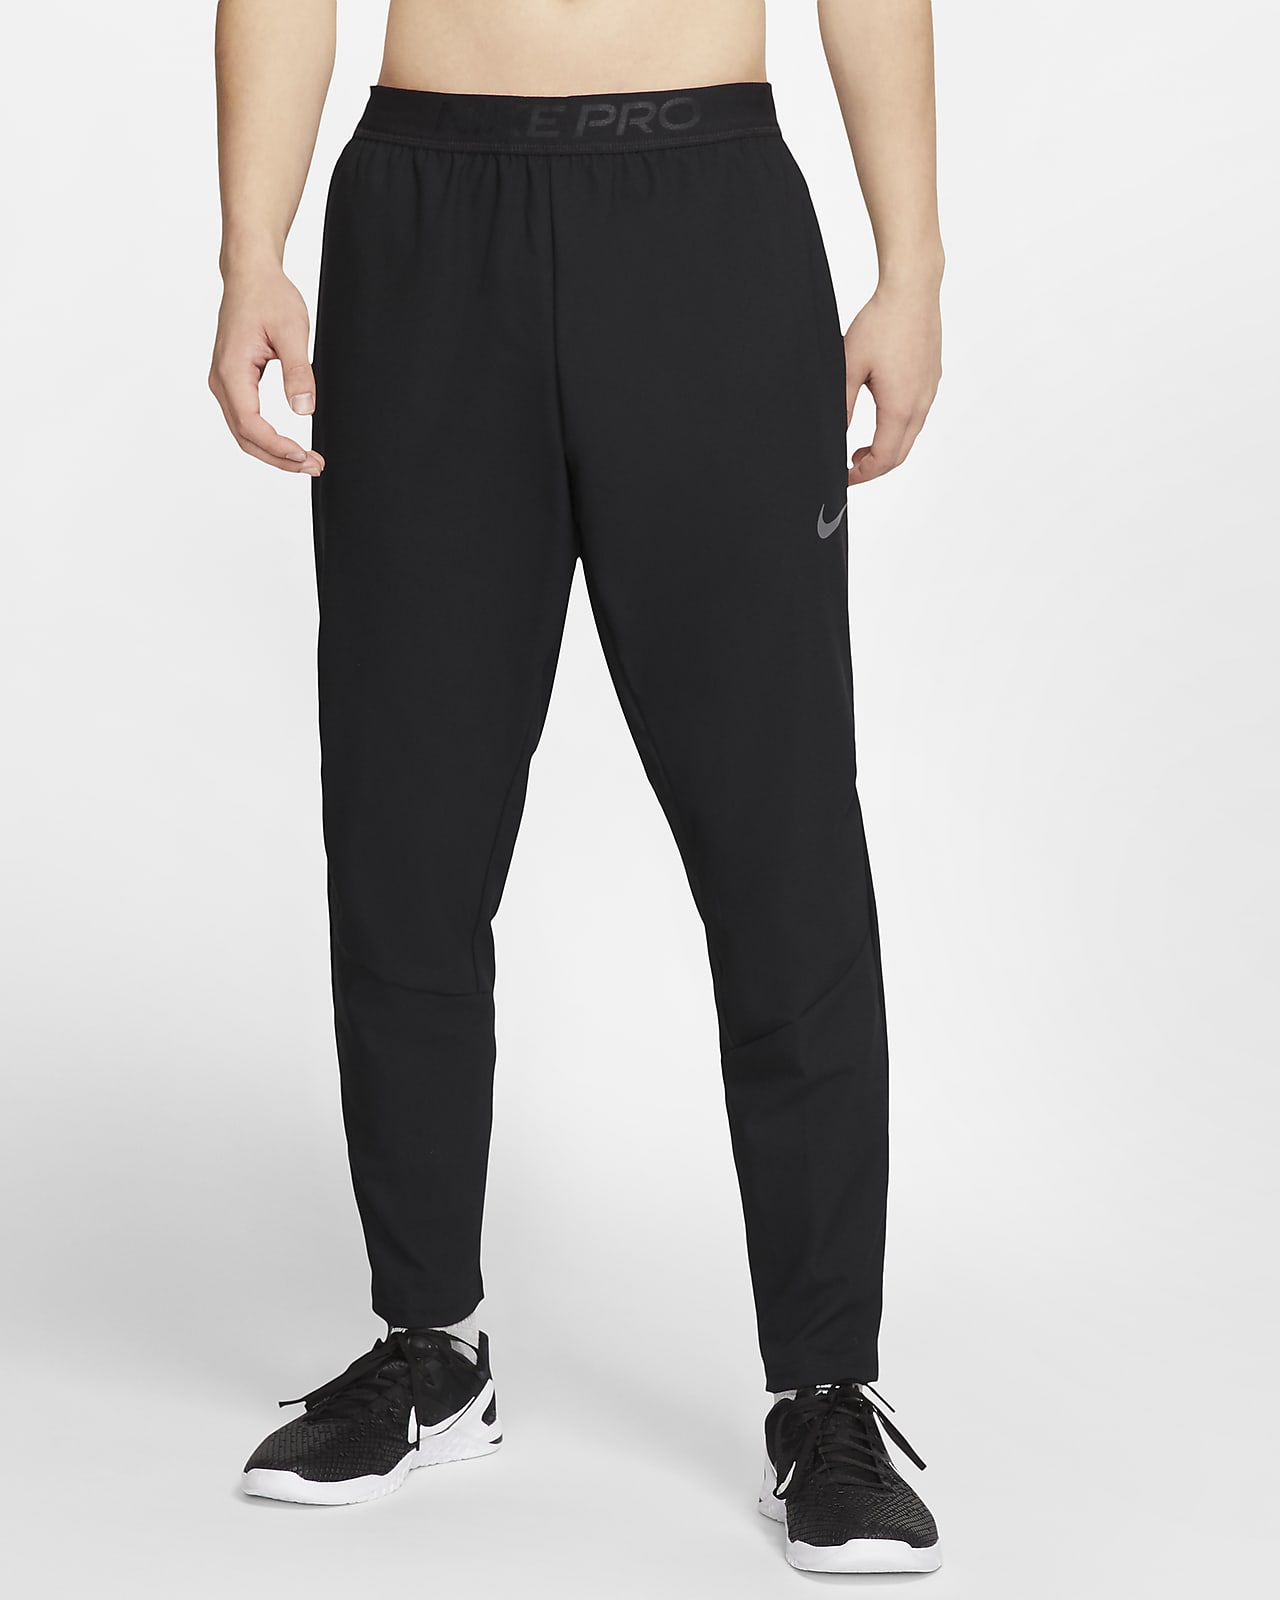 Pantaloni da allenamento Nike Flex - Uomo